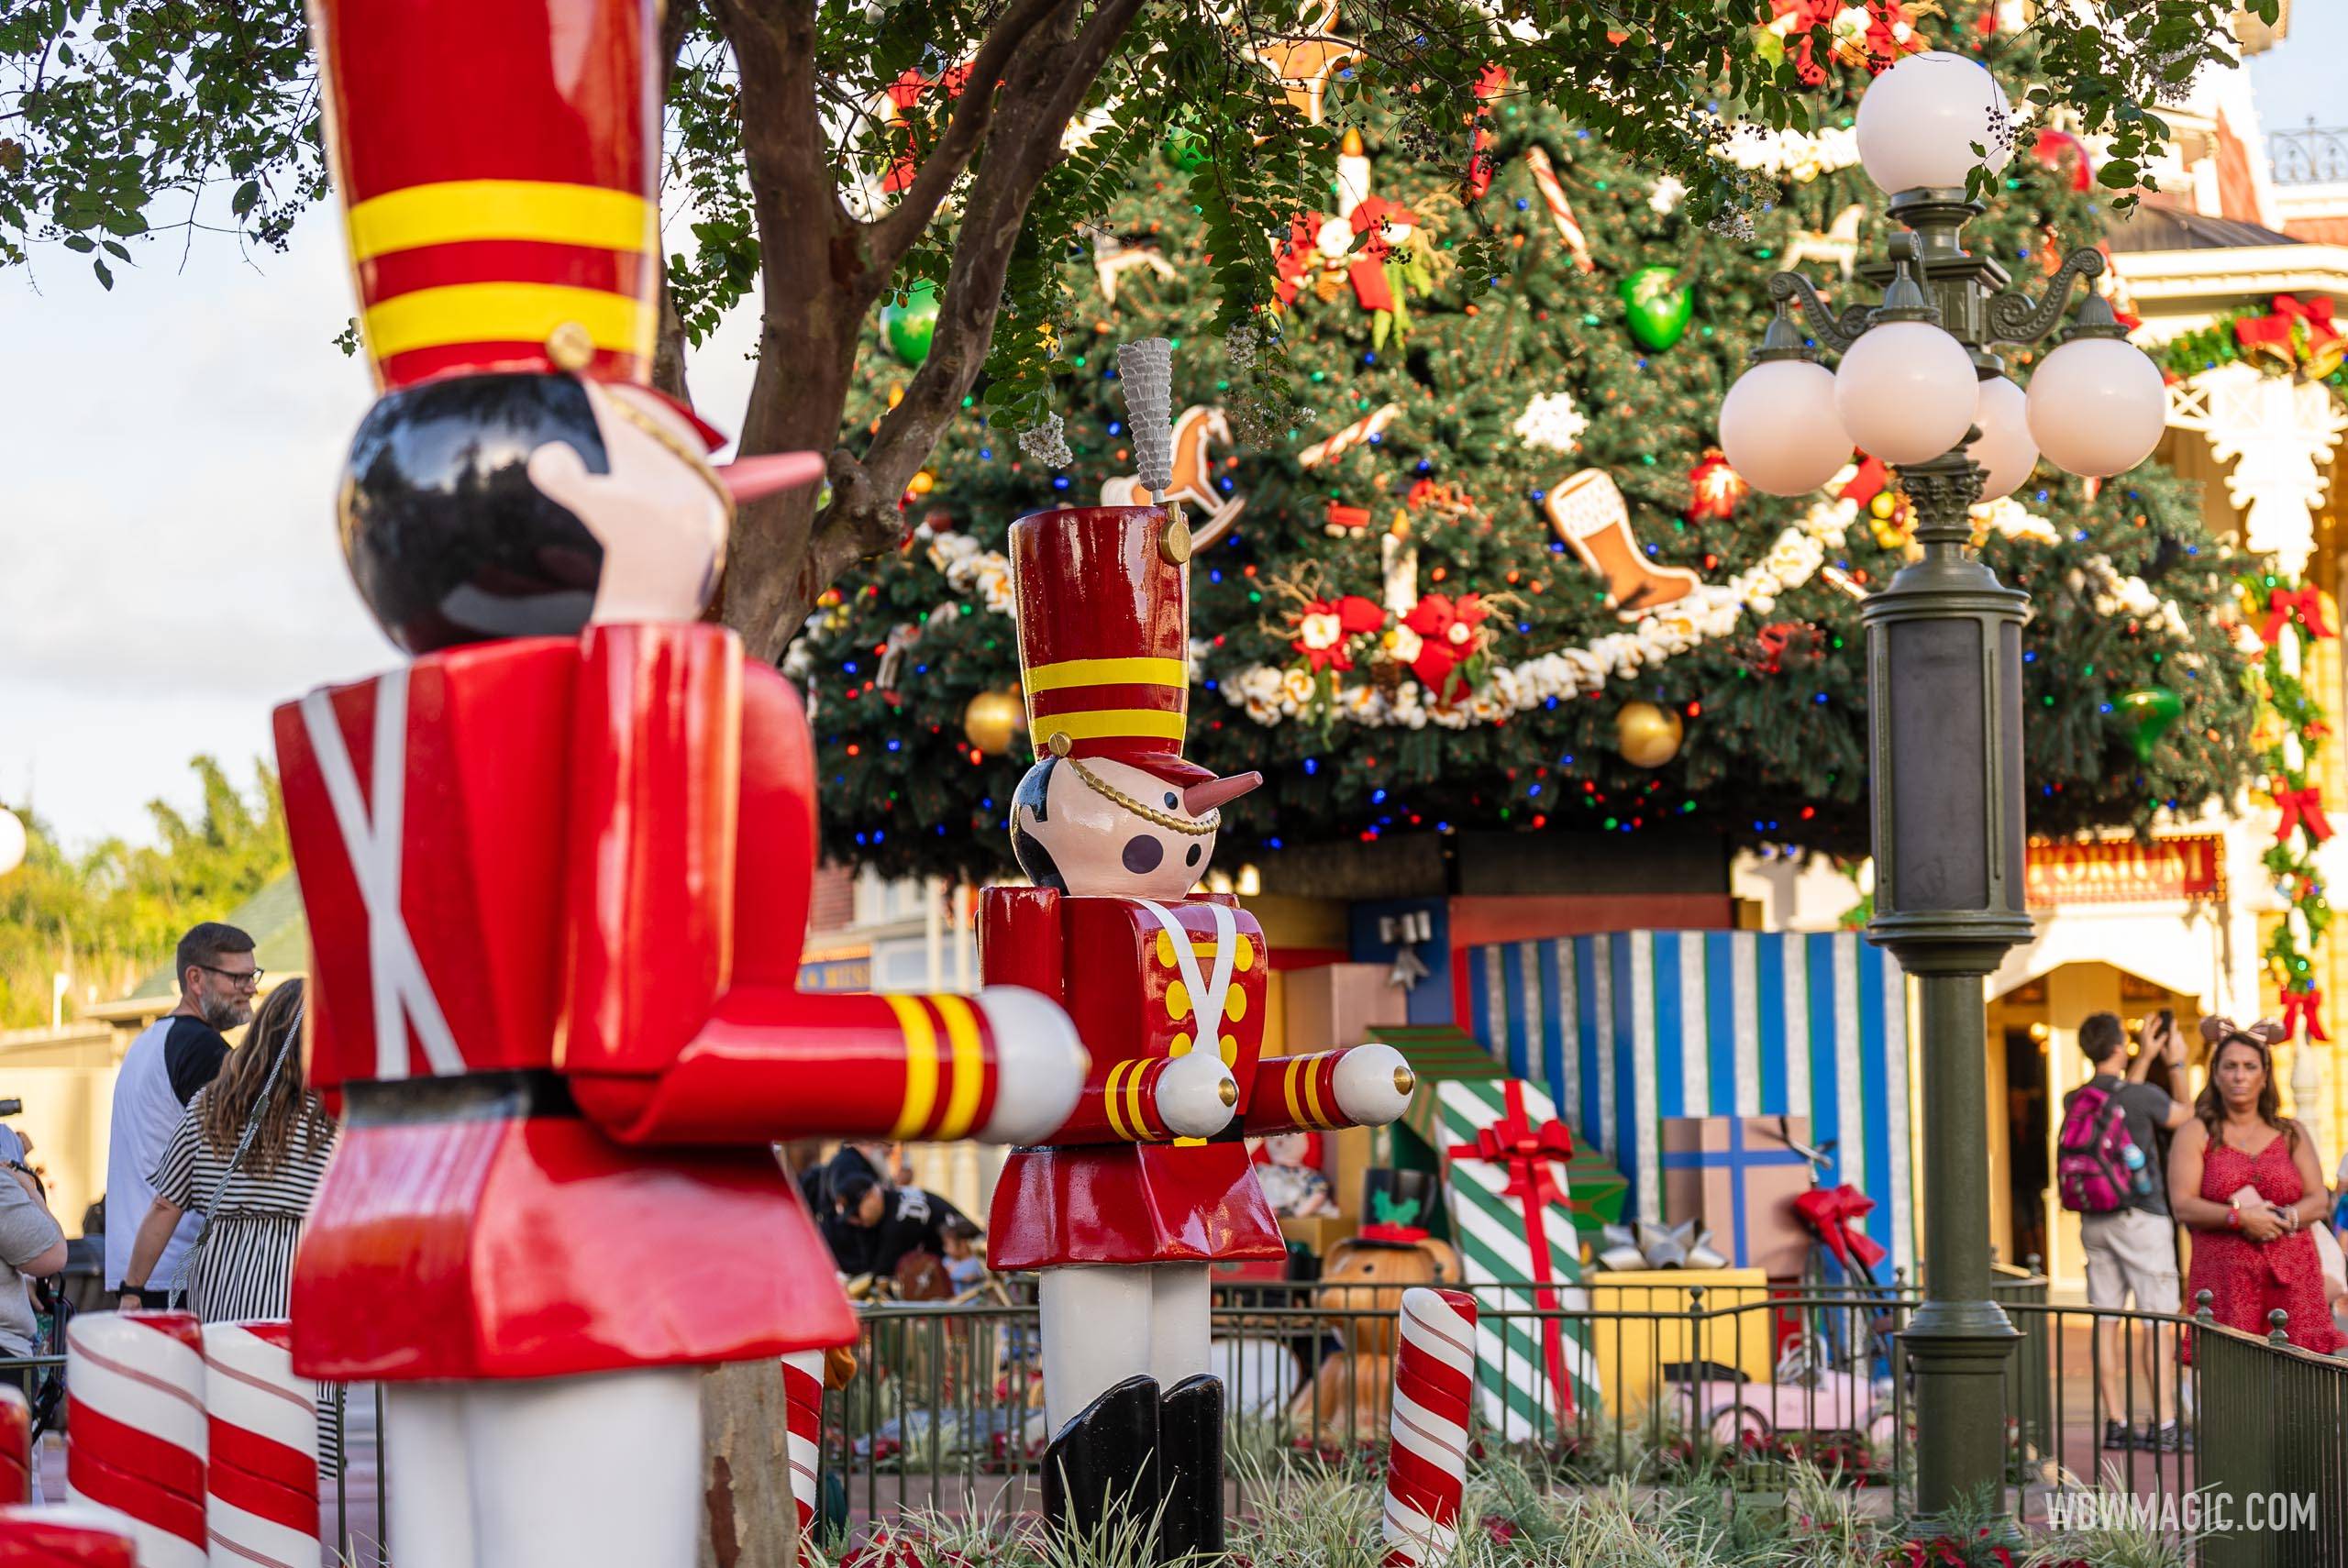 Magic Kingdom Christmas Tree and holiday decorations